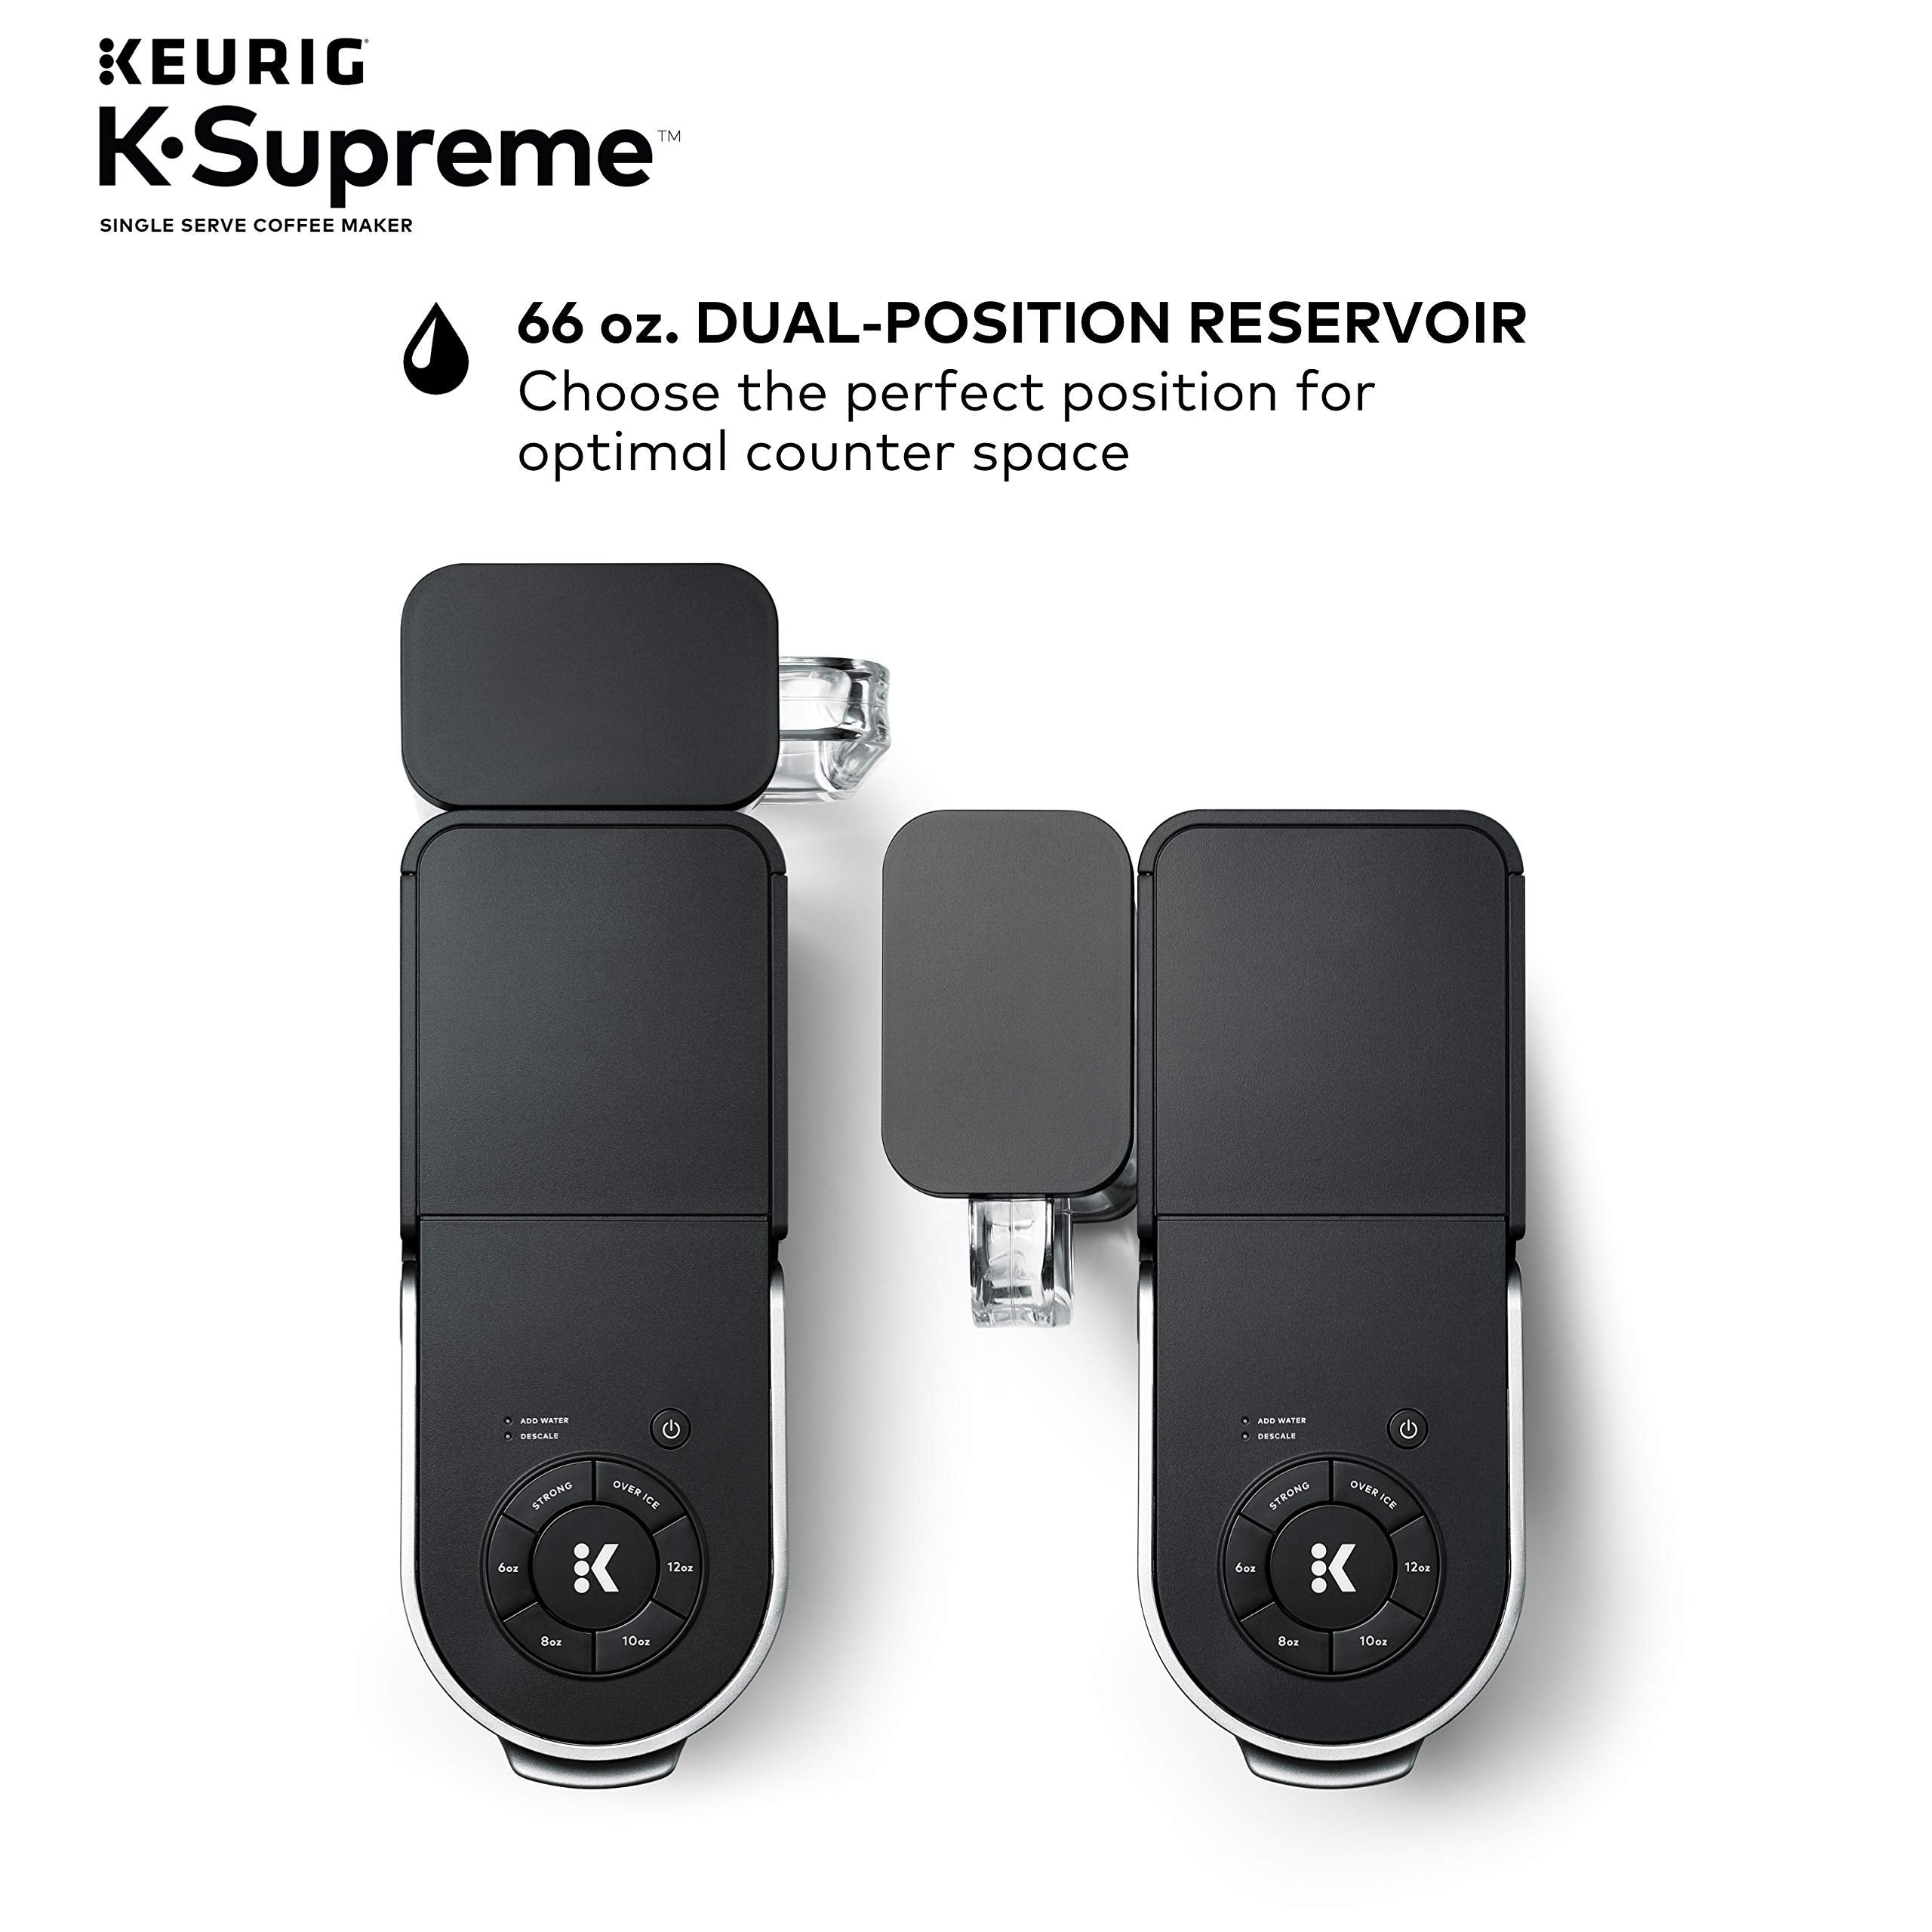 Keurig® K-Supreme Single Serve K-Cup Pod Coffee Maker, MultiStream Technology  - Very Good